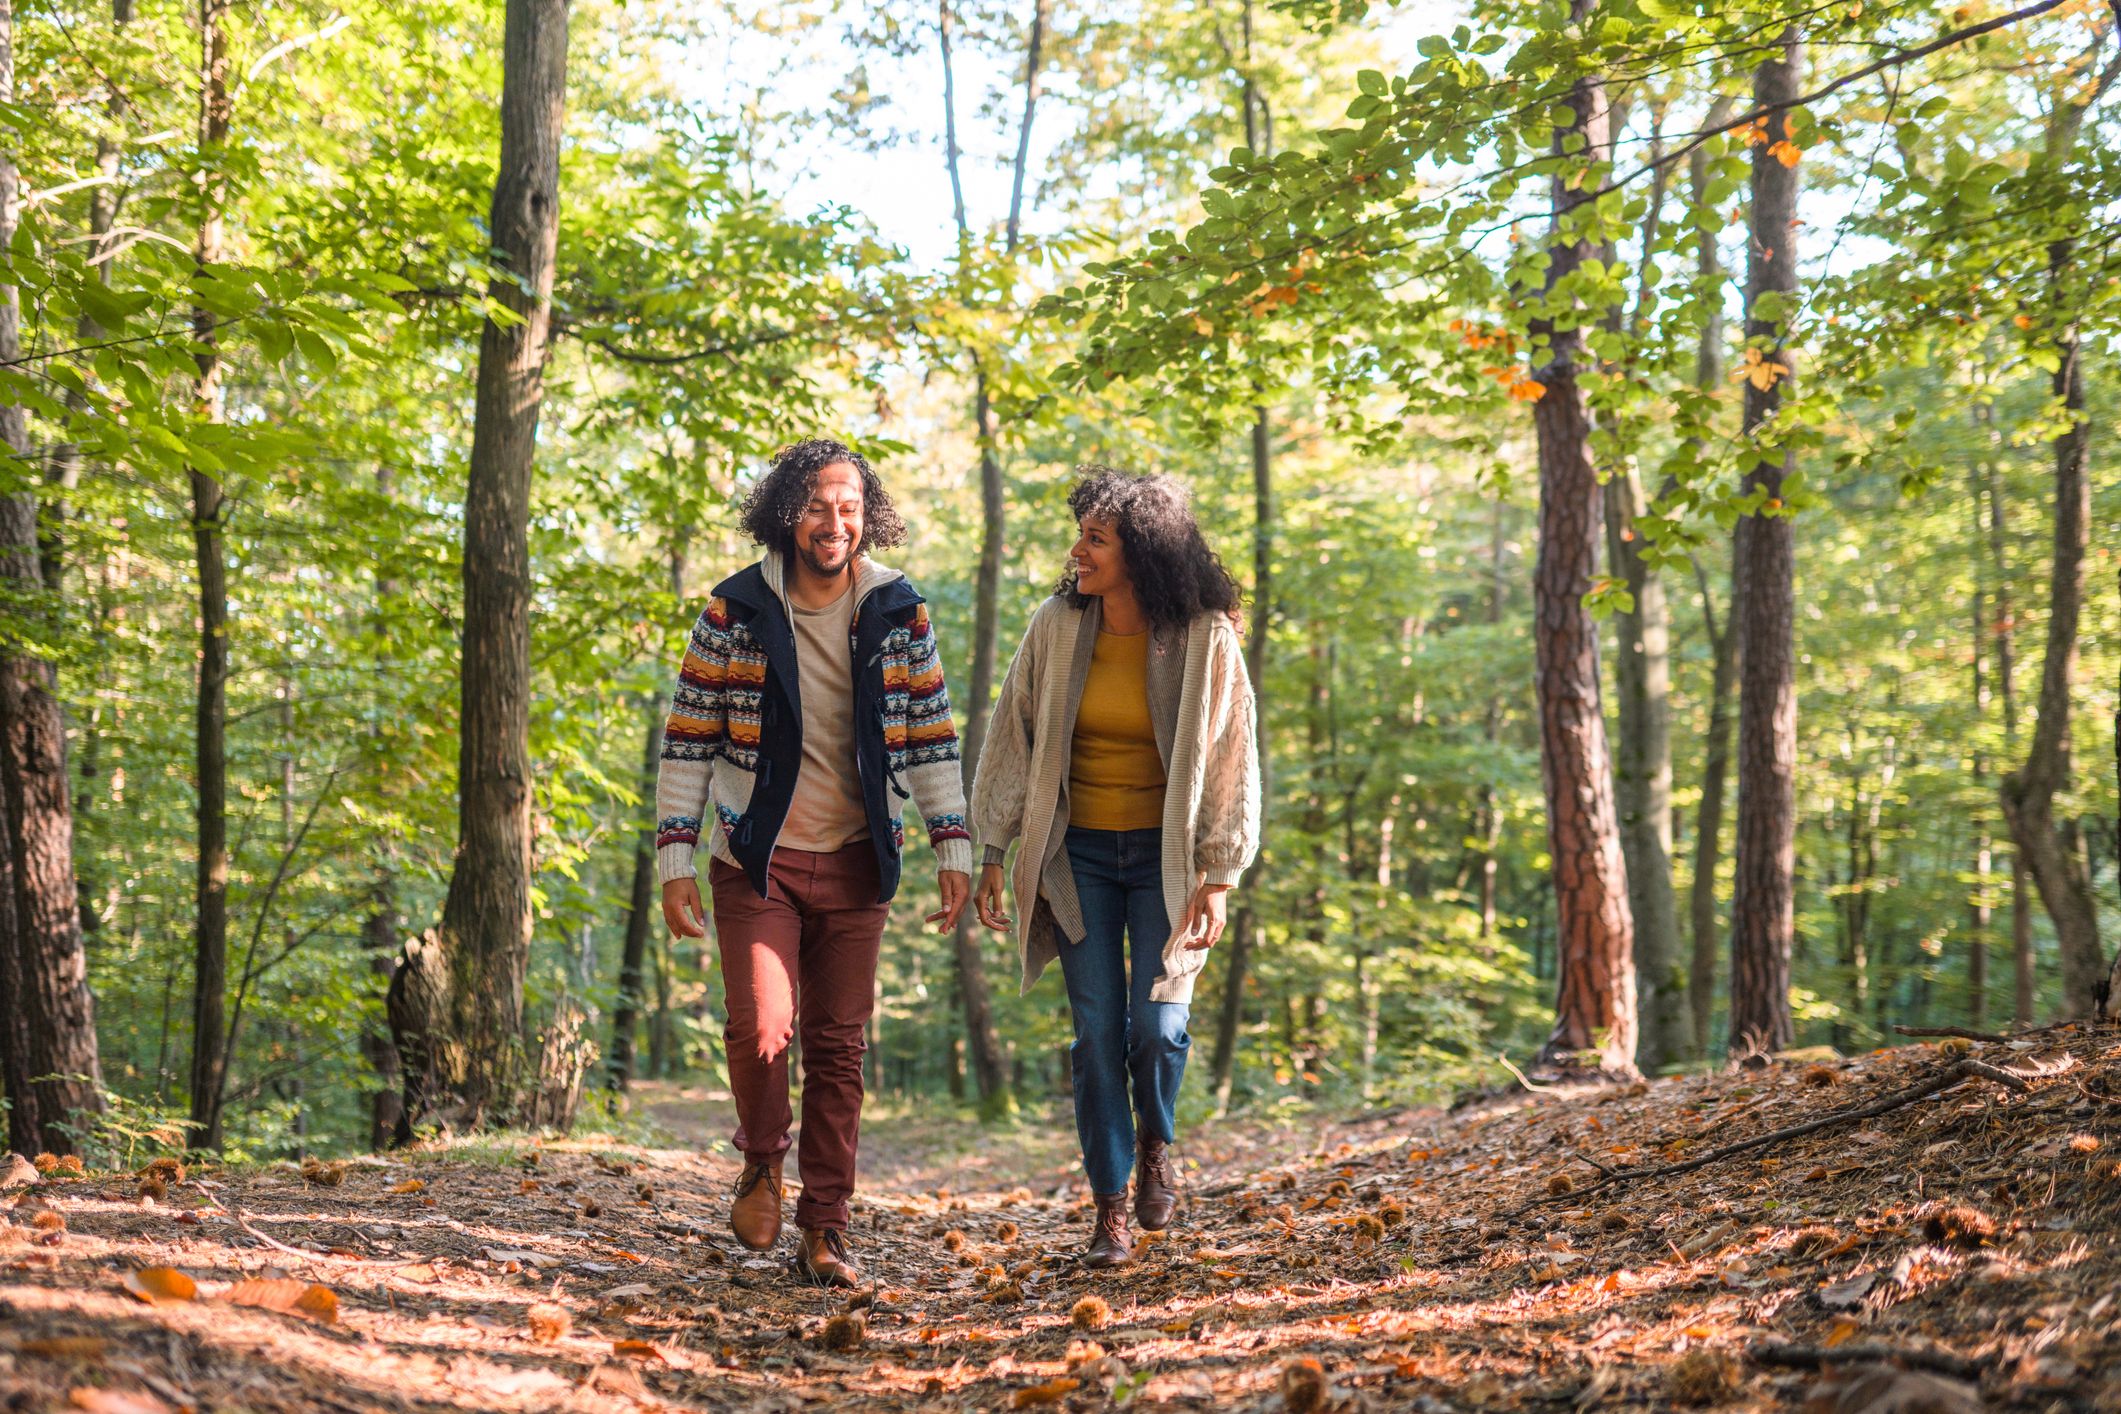 32 Romantic Fall Date Ideas - Fun Autumn Dates for Couples